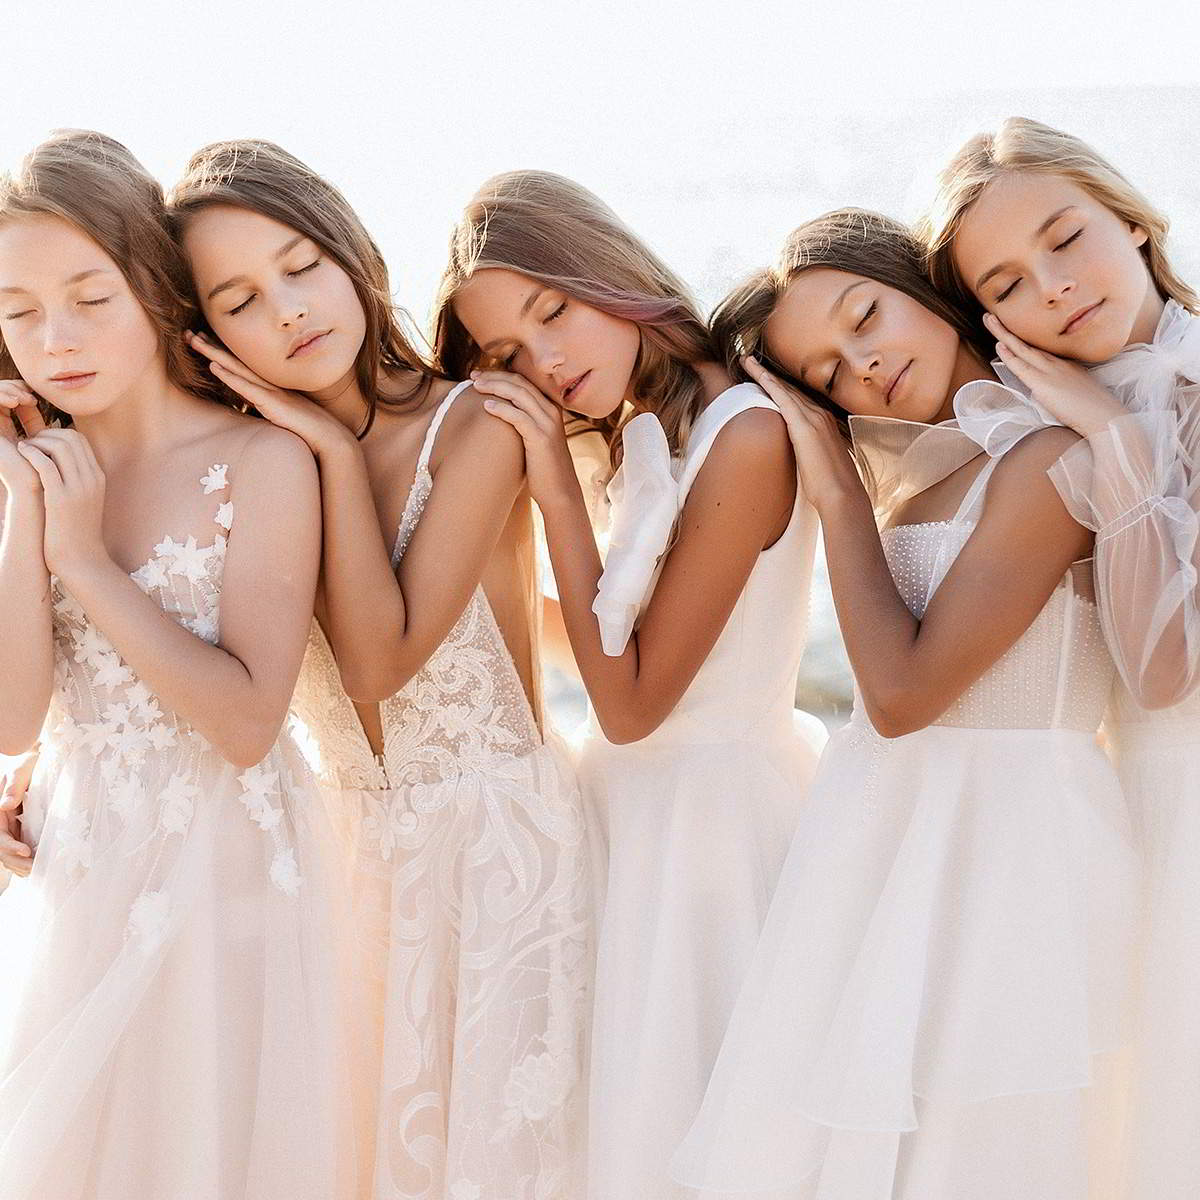 pollardi kids 2021 childrens collection featured on wedding inspirasi thumbnail